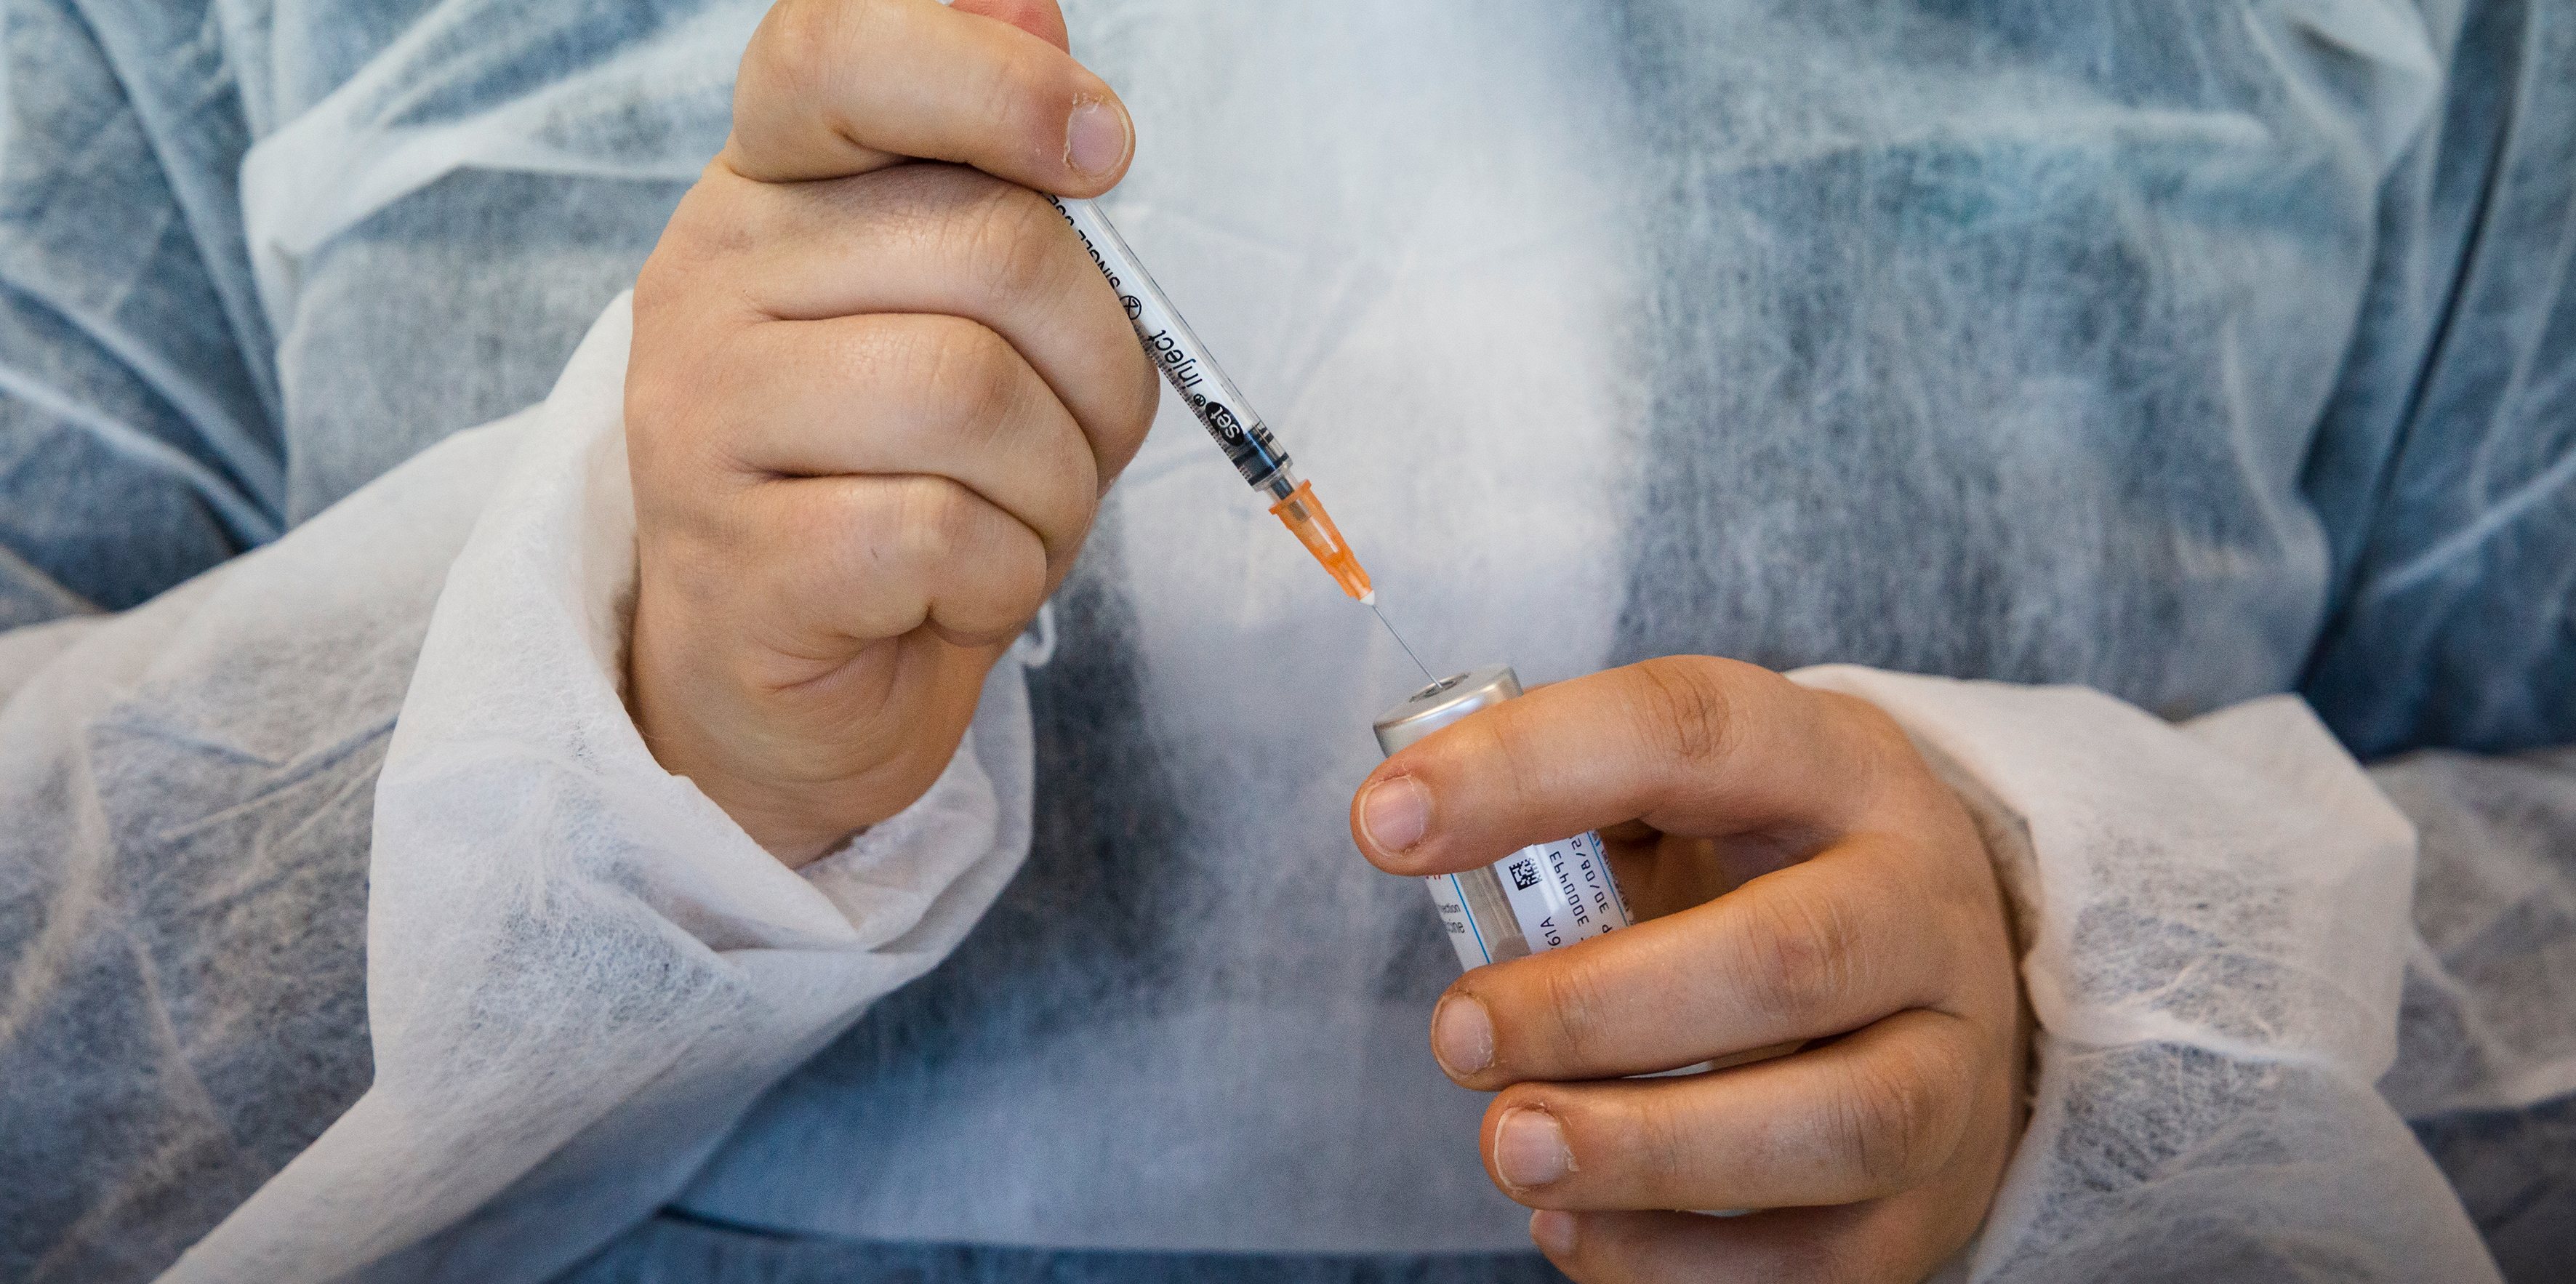 Second Dose Of Moderna Vaccine In Portugal